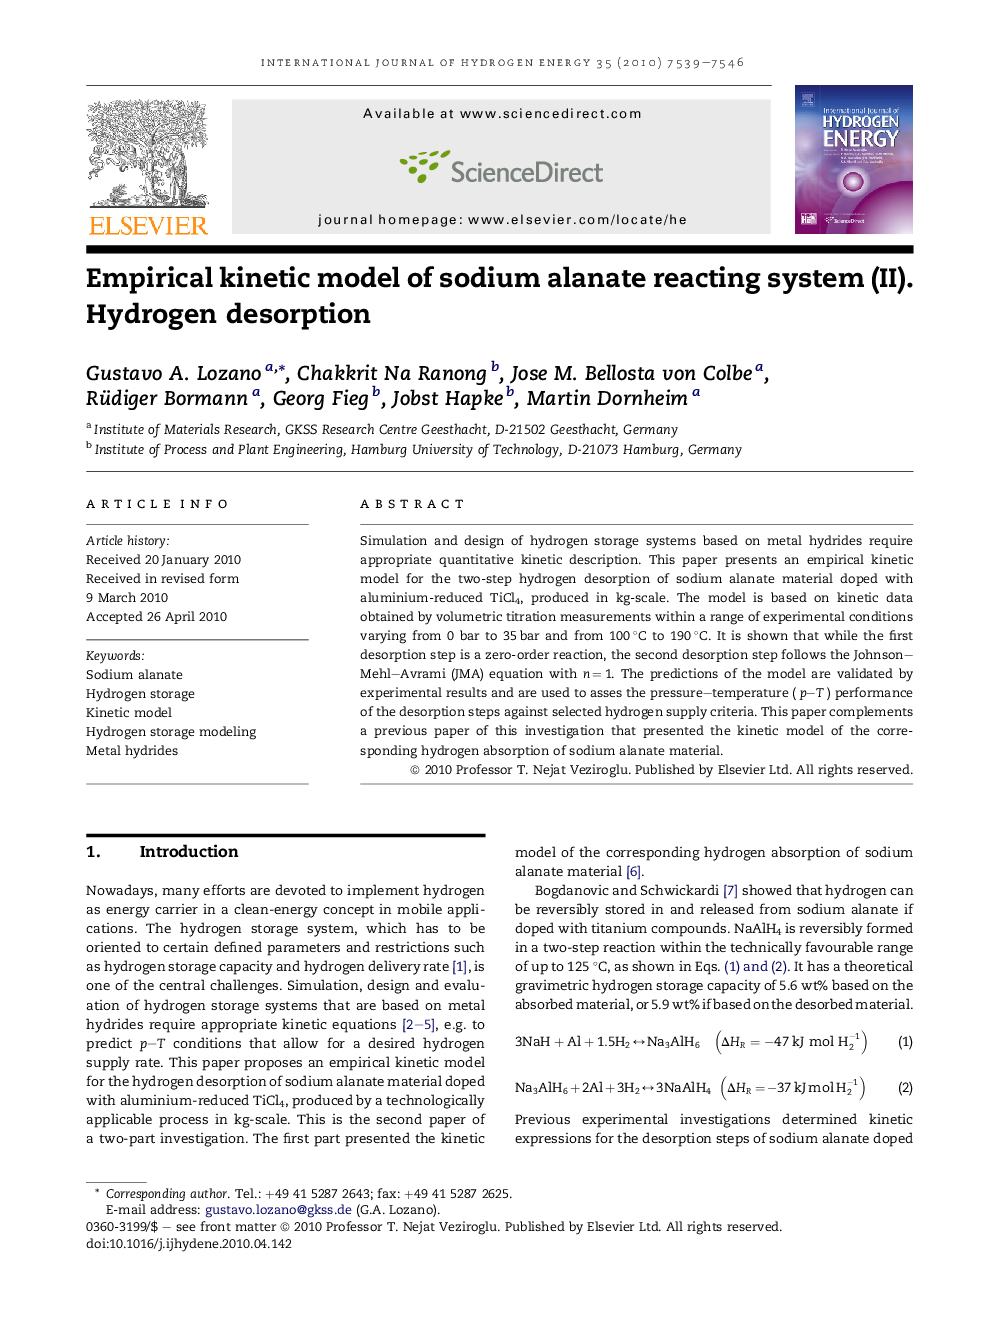 Empirical kinetic model of sodium alanate reacting system (II). Hydrogen desorption